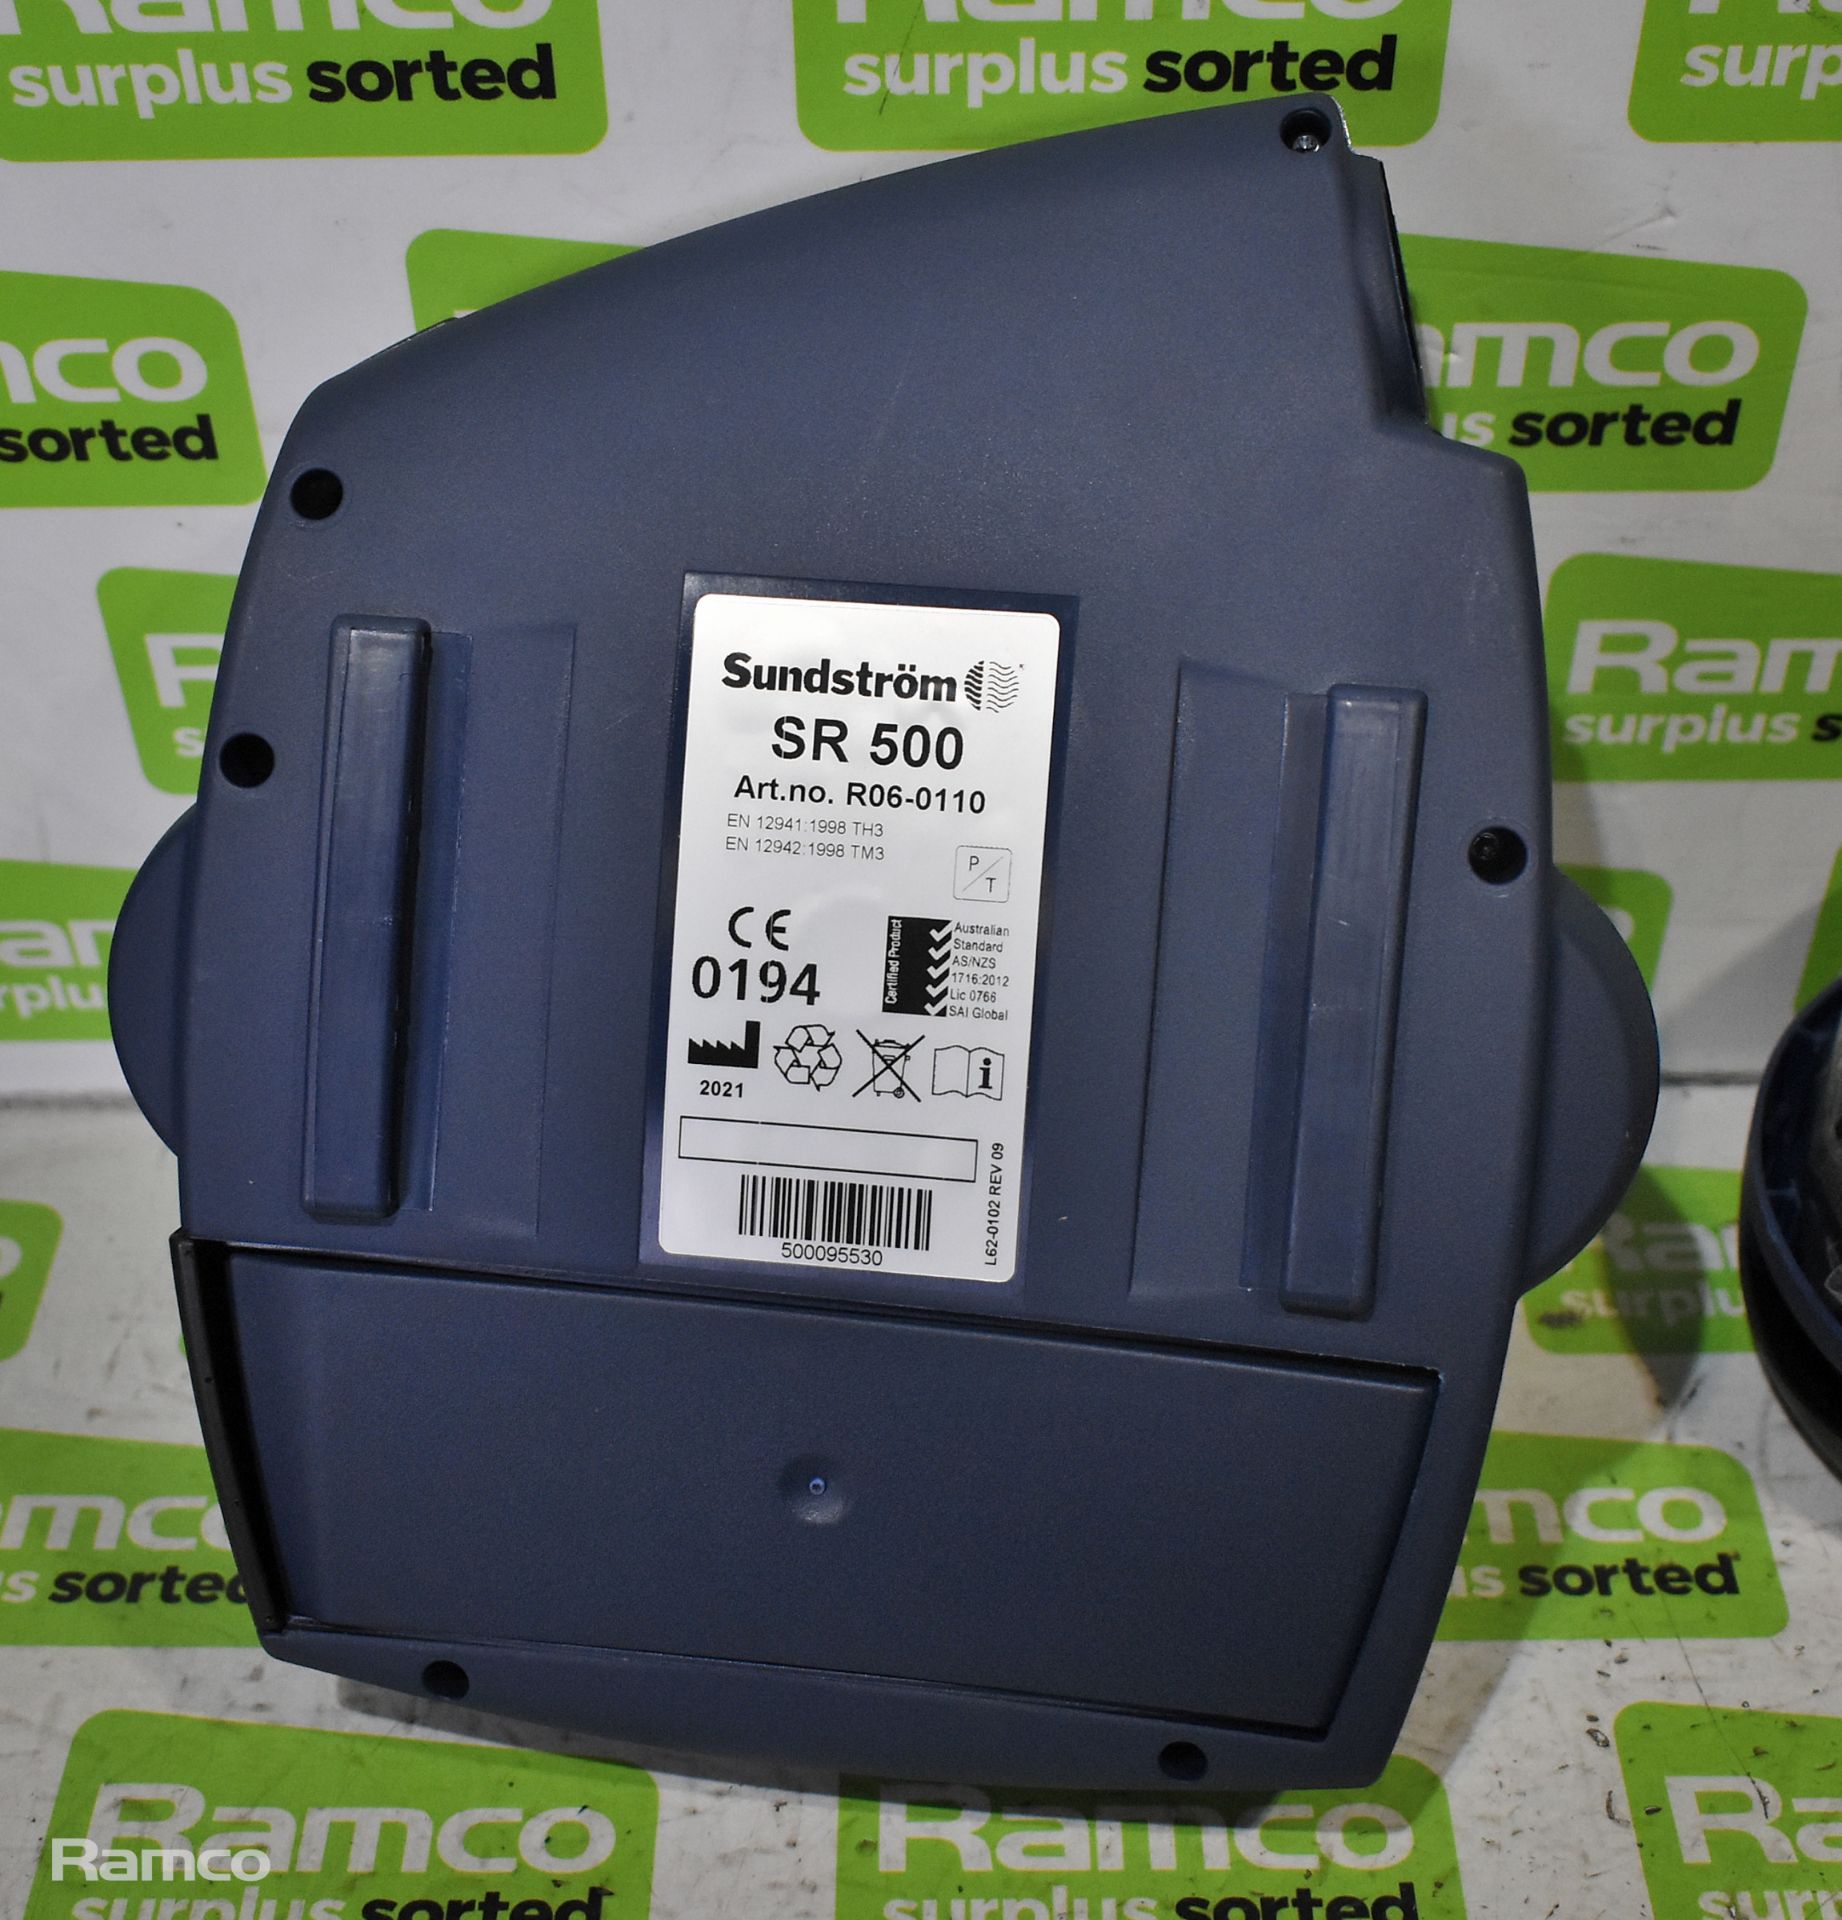 2x Sundstrom SR 500 powered respirator fan units - Image 4 of 11